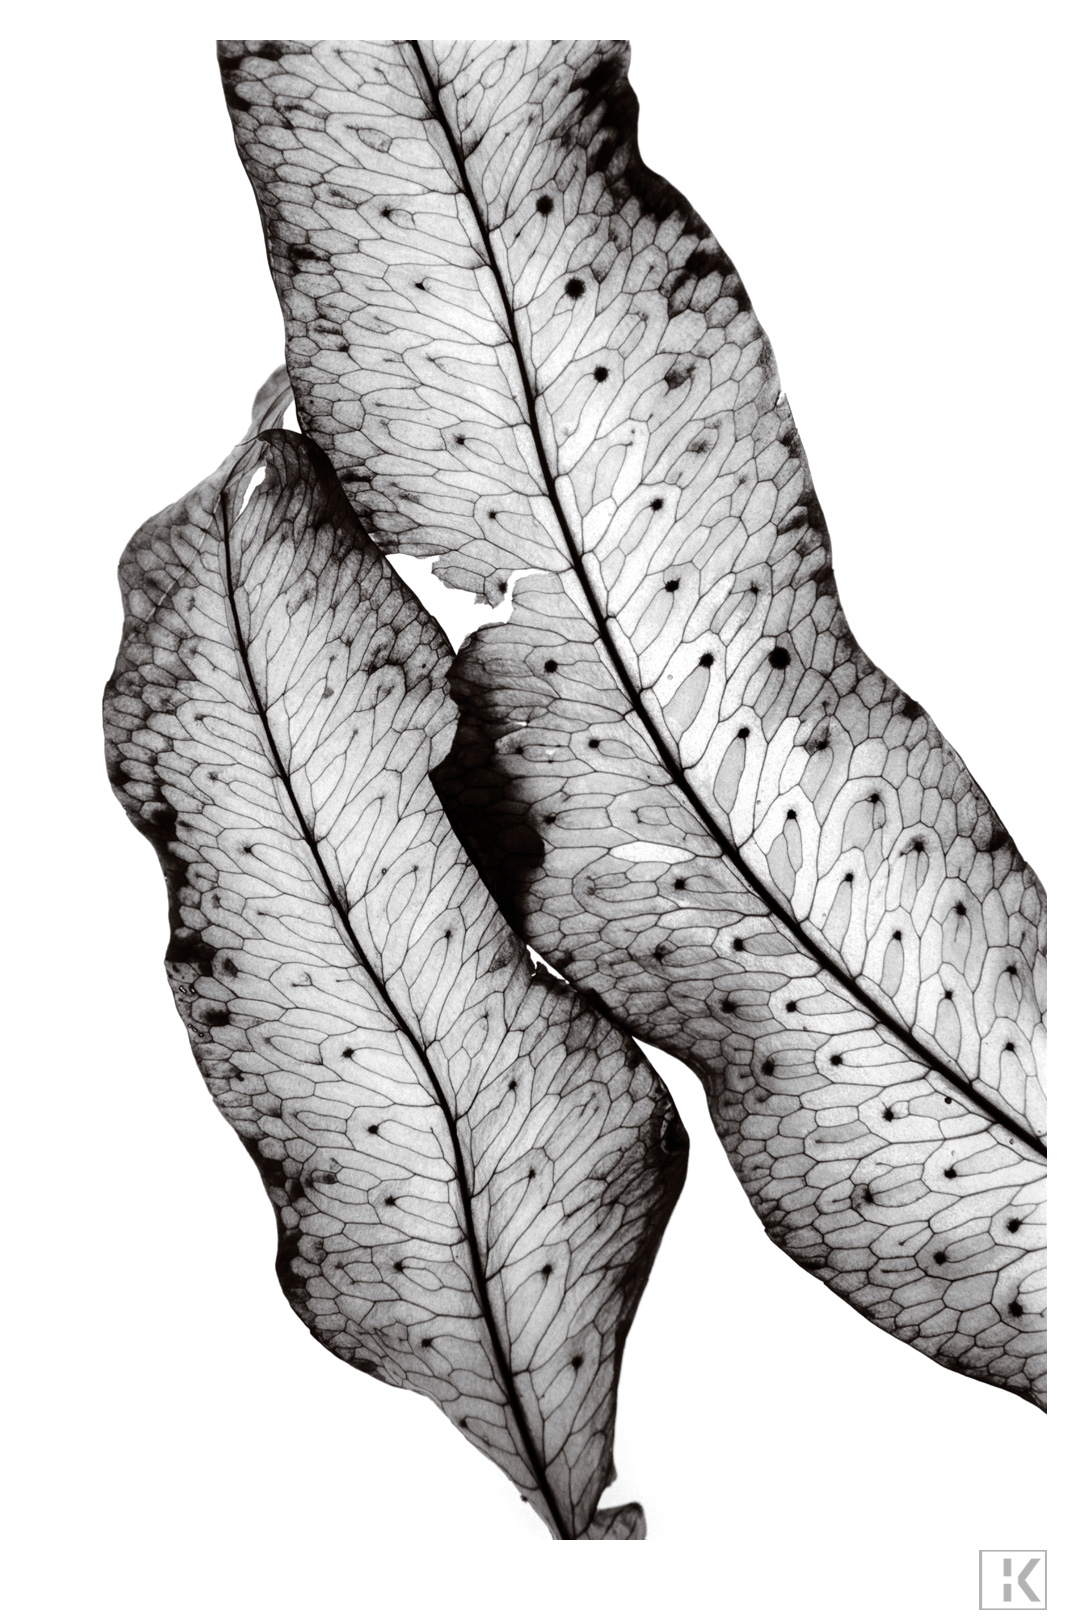 Polypody (Polypodium Vulgare)